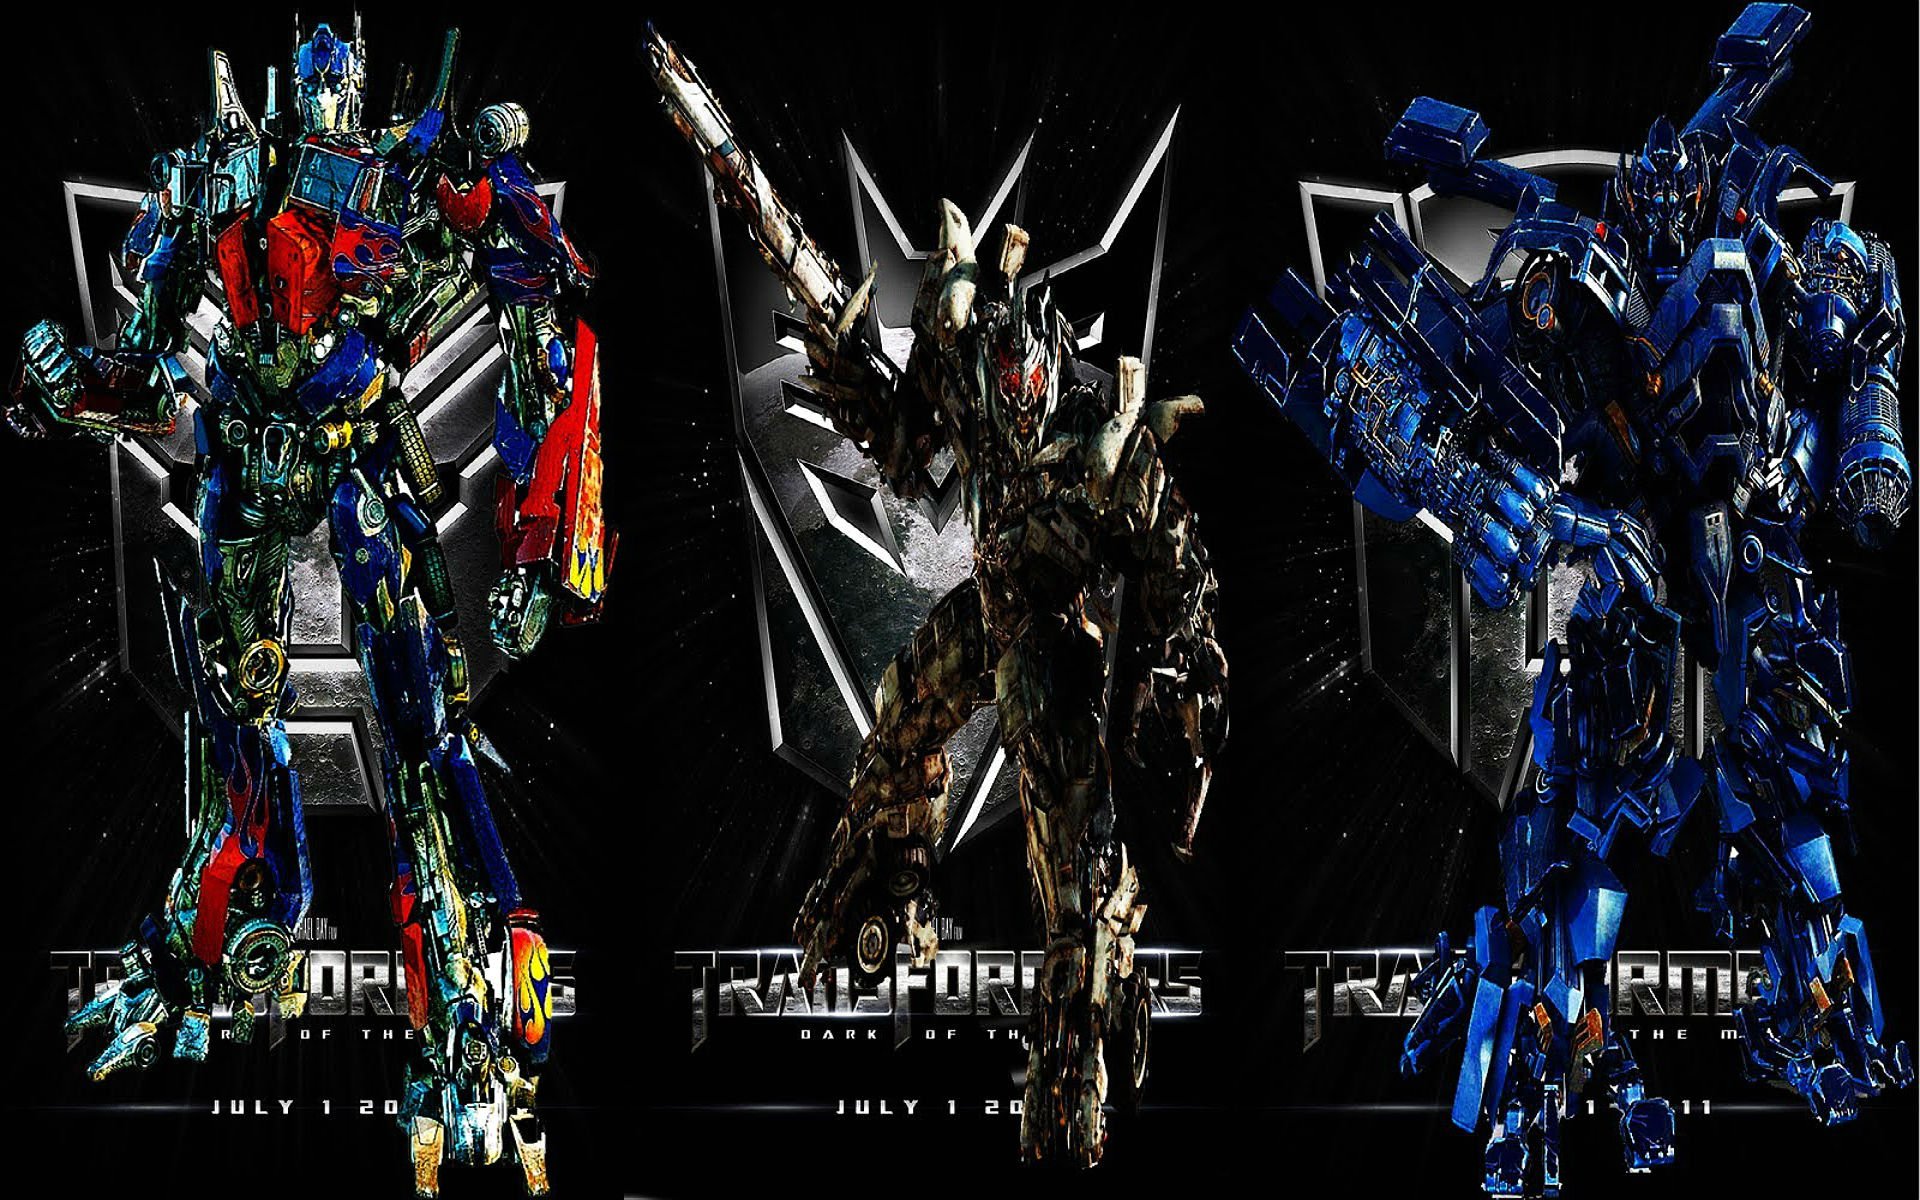 transformers, Age, Extinction, Action, Adventure, Sci fi, Mecha Wallpaper